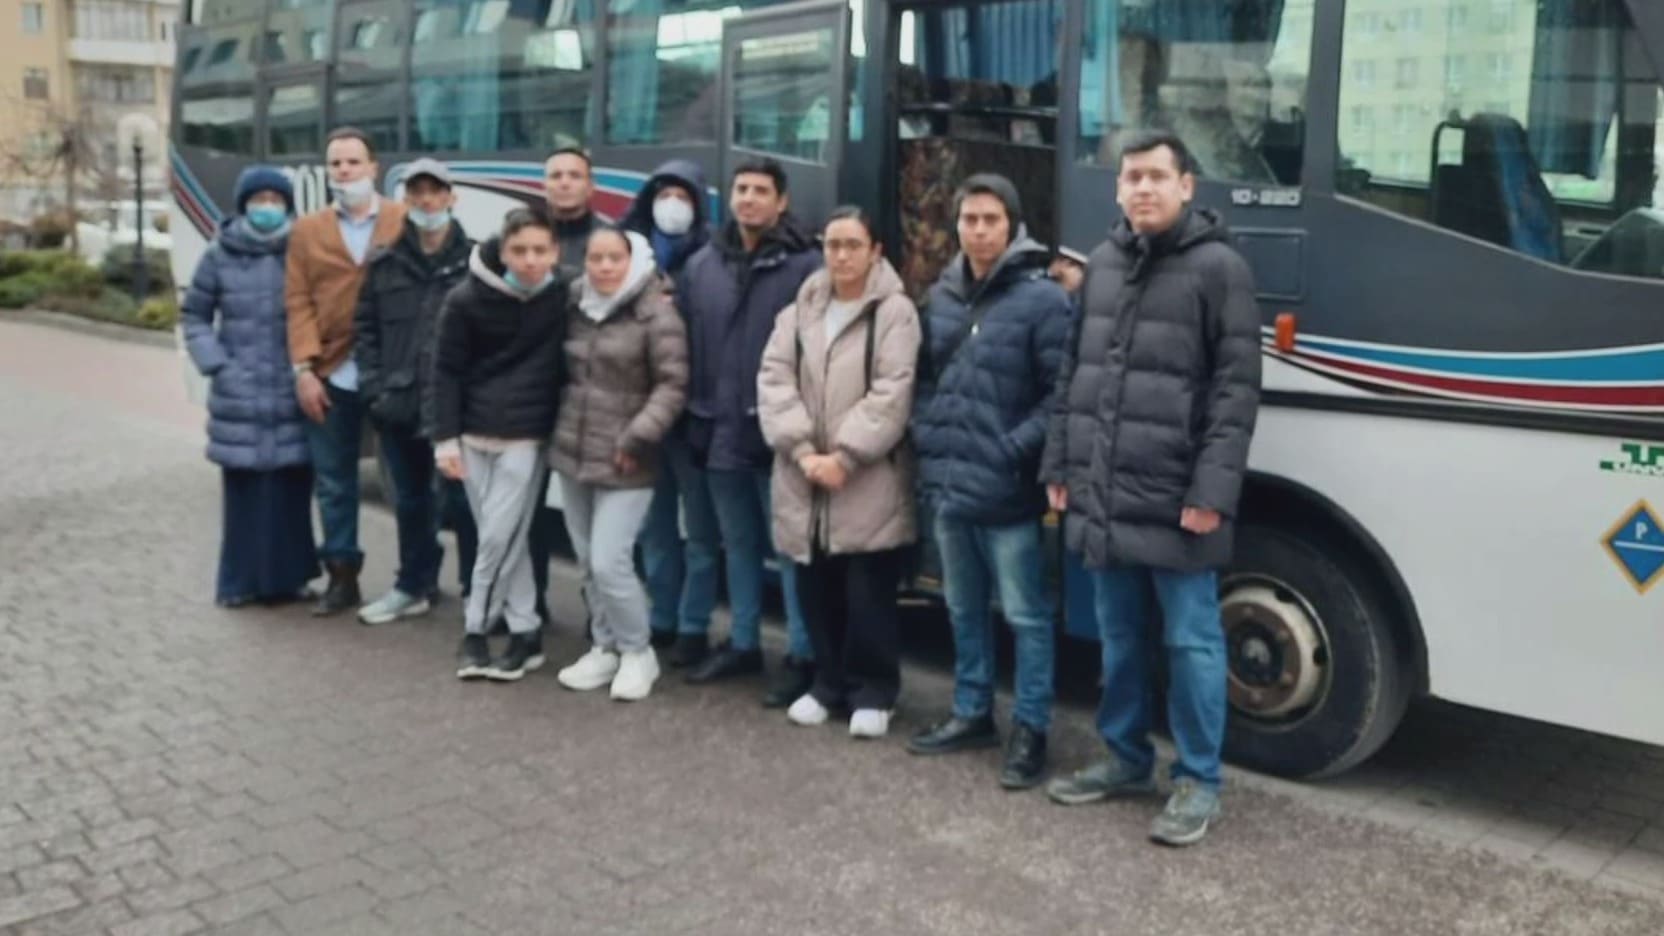 mexicanos en ucrania abordan autobus para llegar a rumania